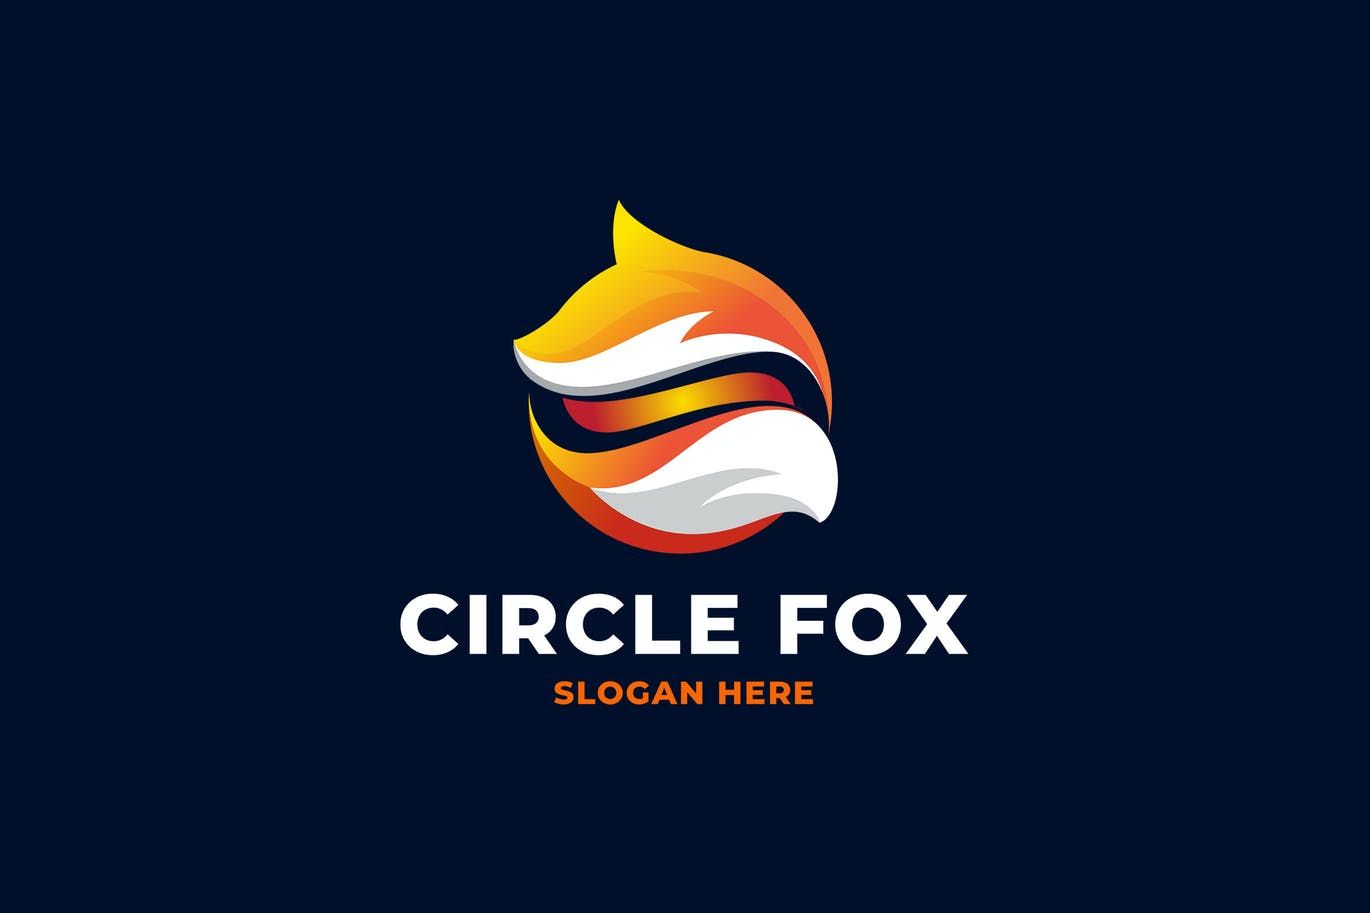 Oragne fox logo design